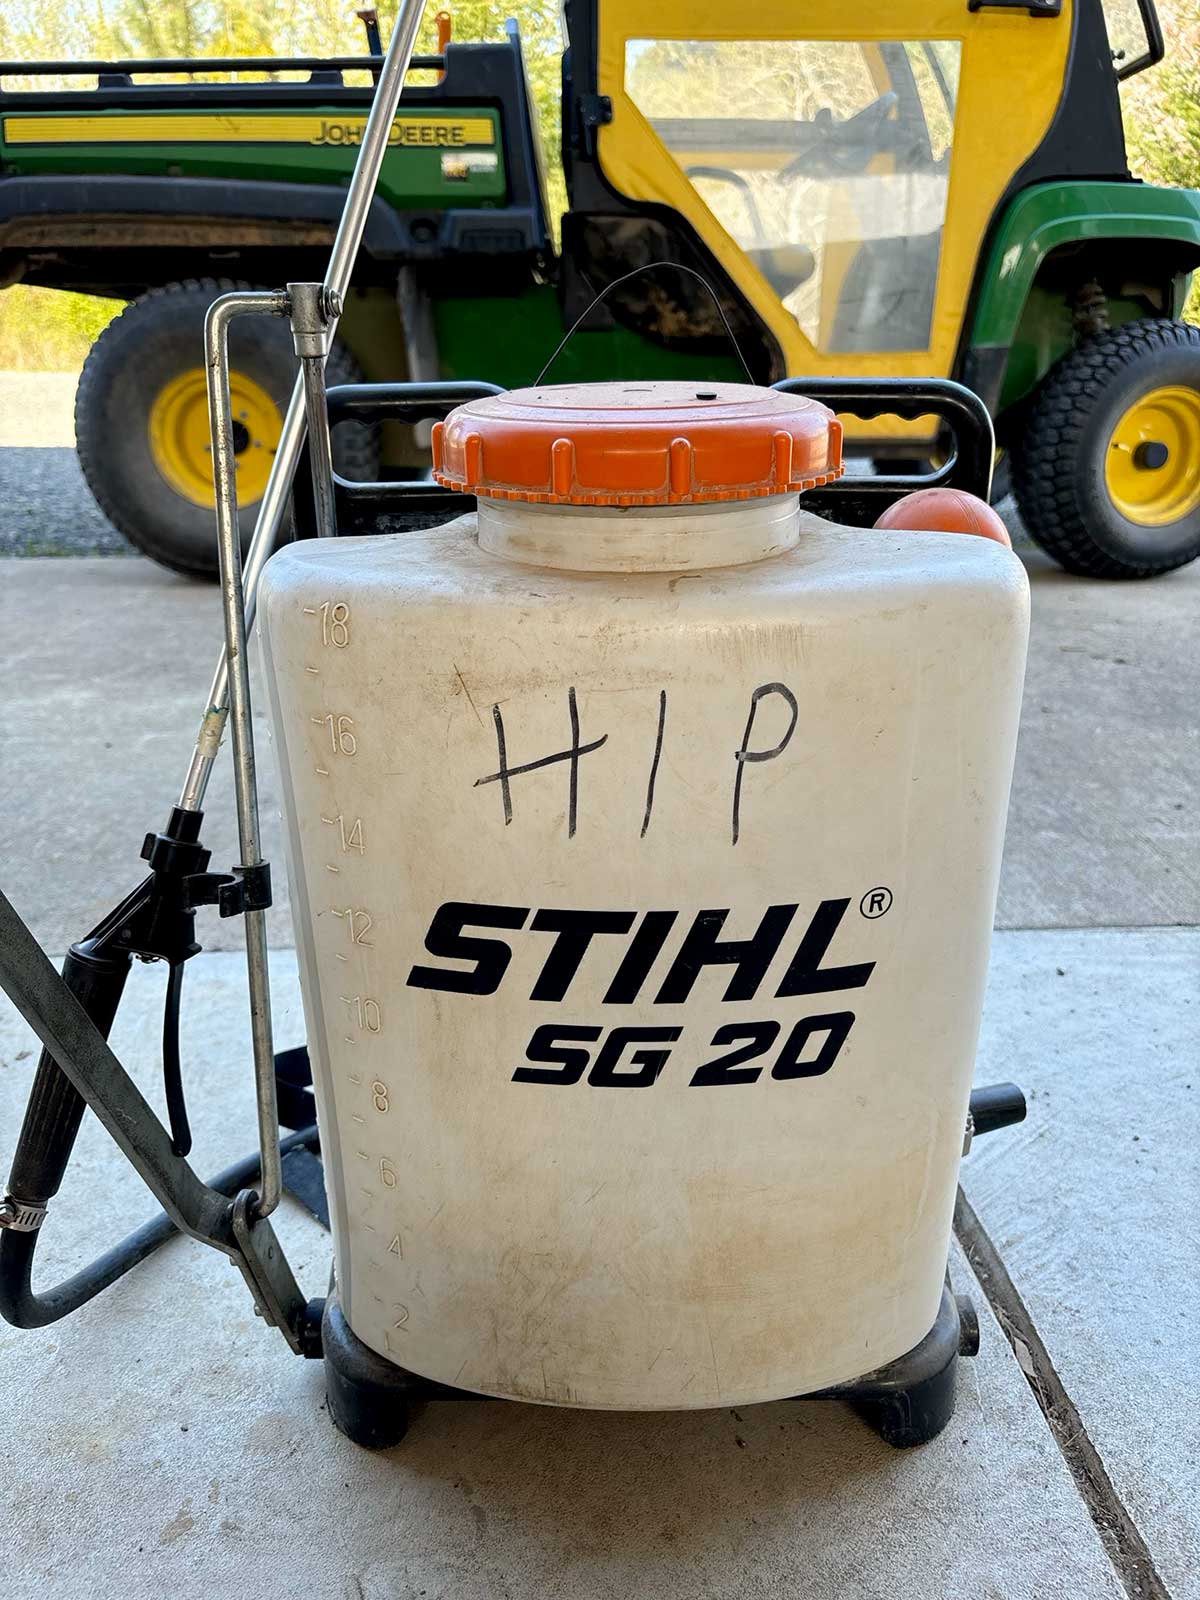 photo of STIHL backpack sprayer equipment